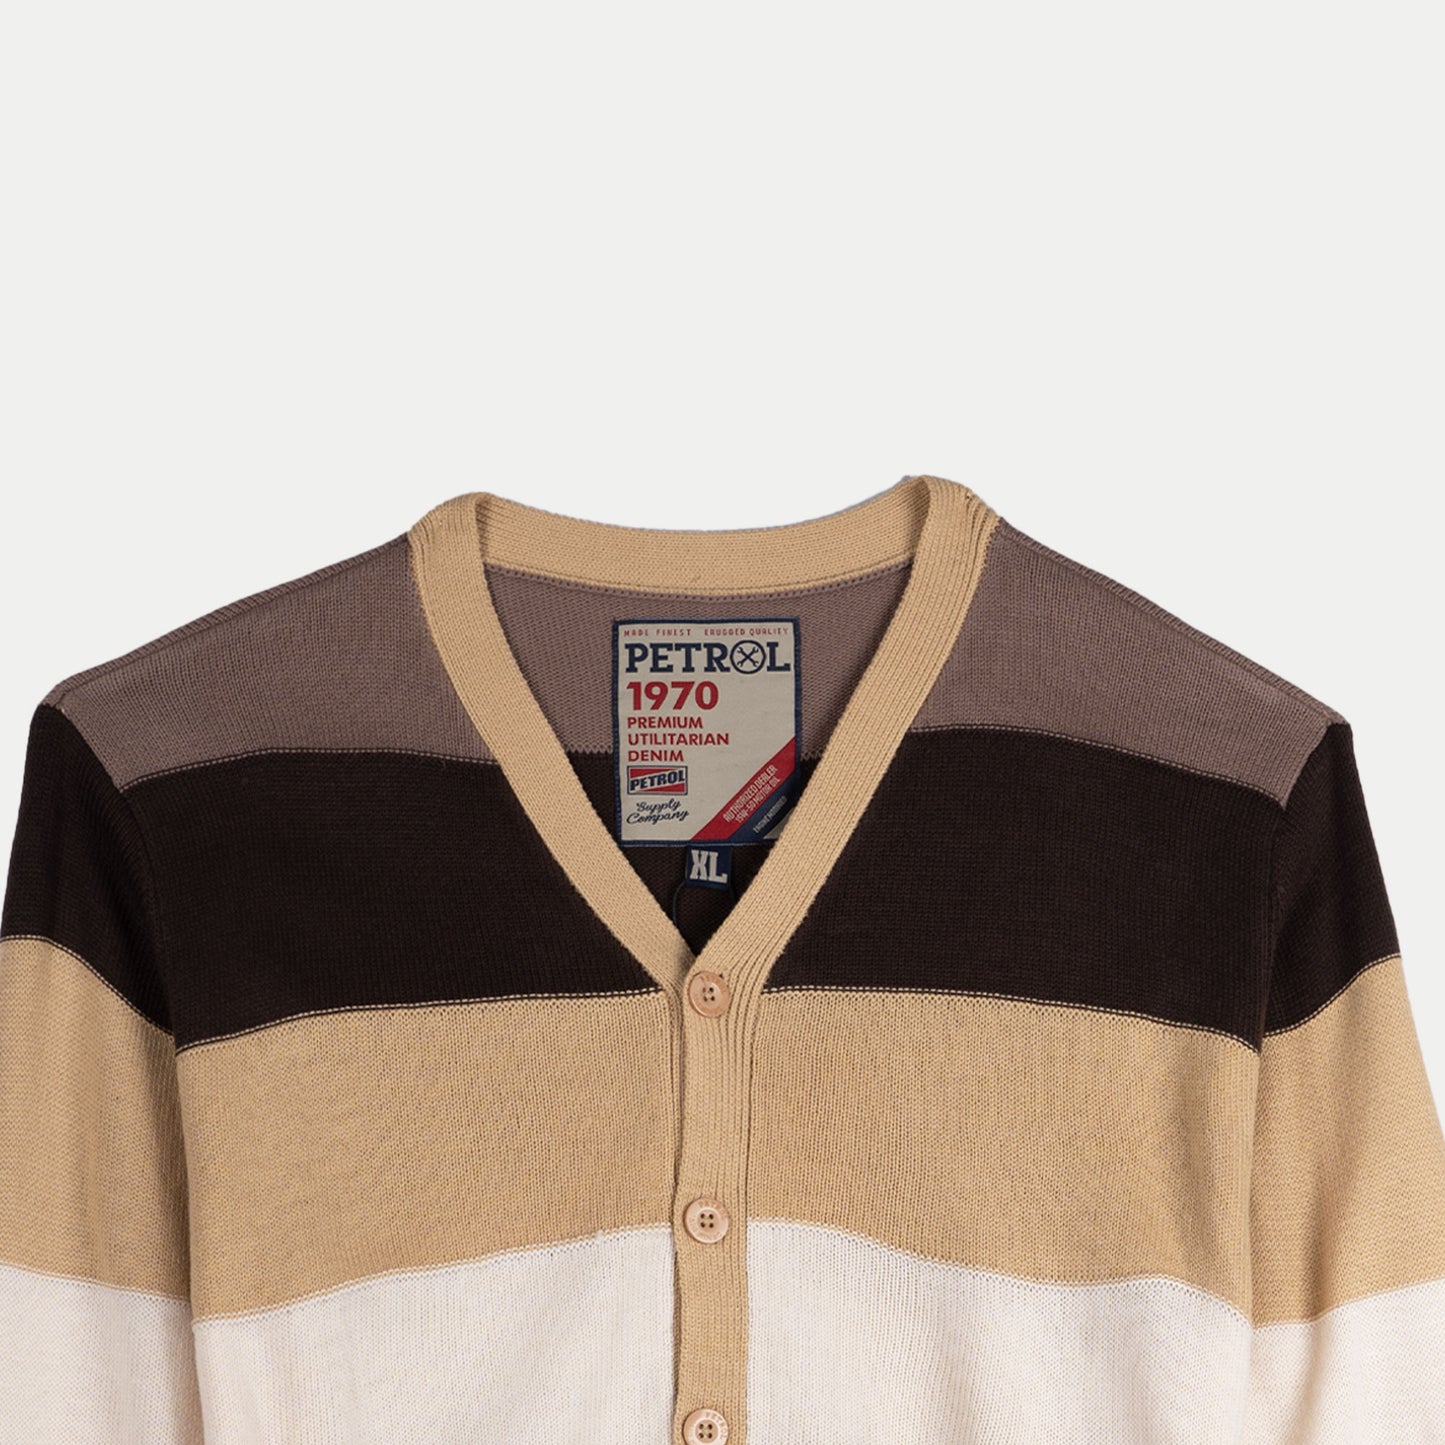 Petrol Men's Basic Jacket Slim Fitting Cotton Fabric Sweatshirt Trendy fashion Casual Top Light Brown Jacket for Men 138140 (Light Brown)